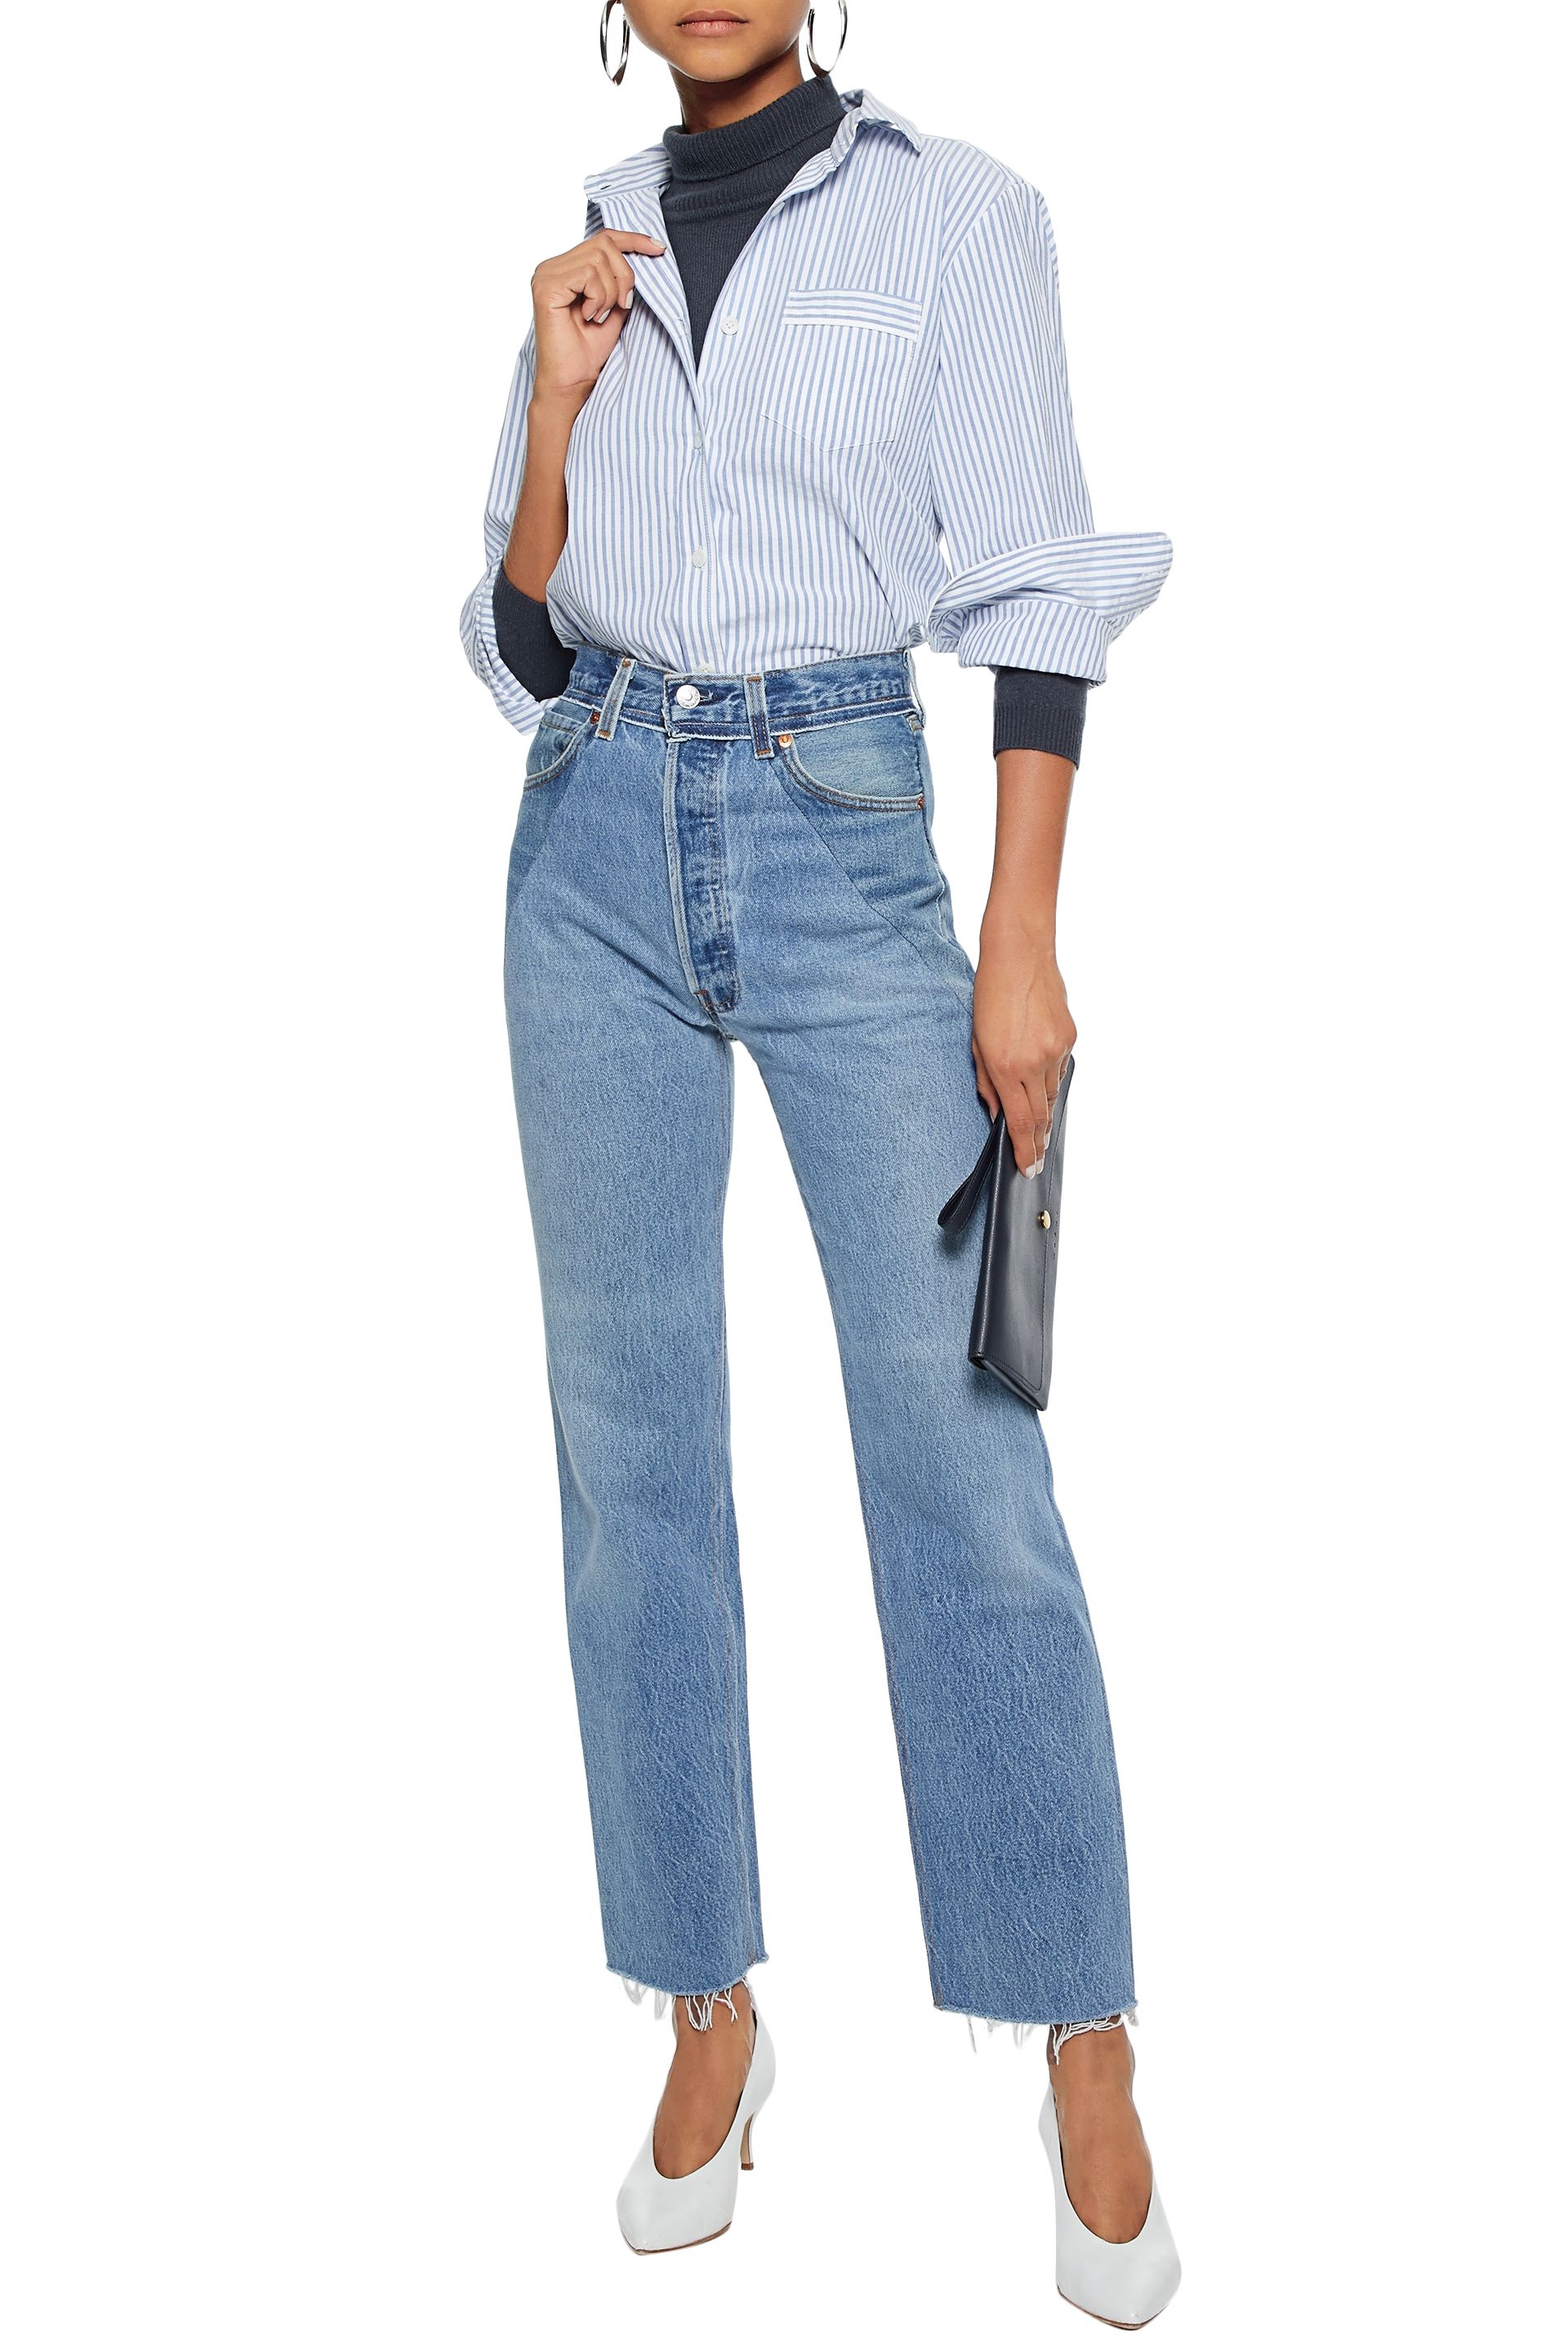  straight-leg jeans + turtleneck long-sleeve + shirt  Image  via     